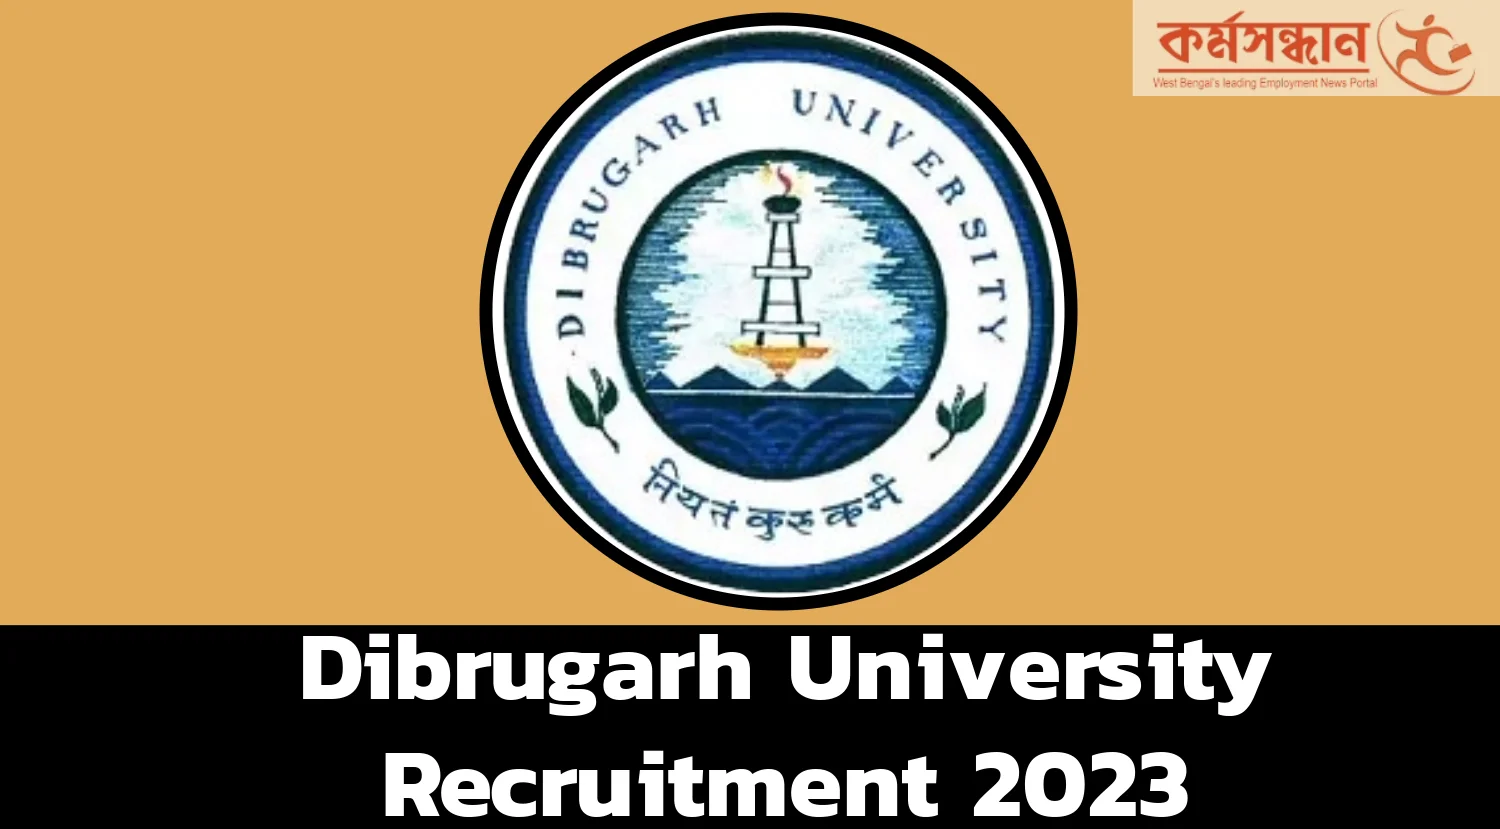 Dibrugarh University Confers Honorary D.Litt. on Achyuta Samanta - KISS  Deemed to be University